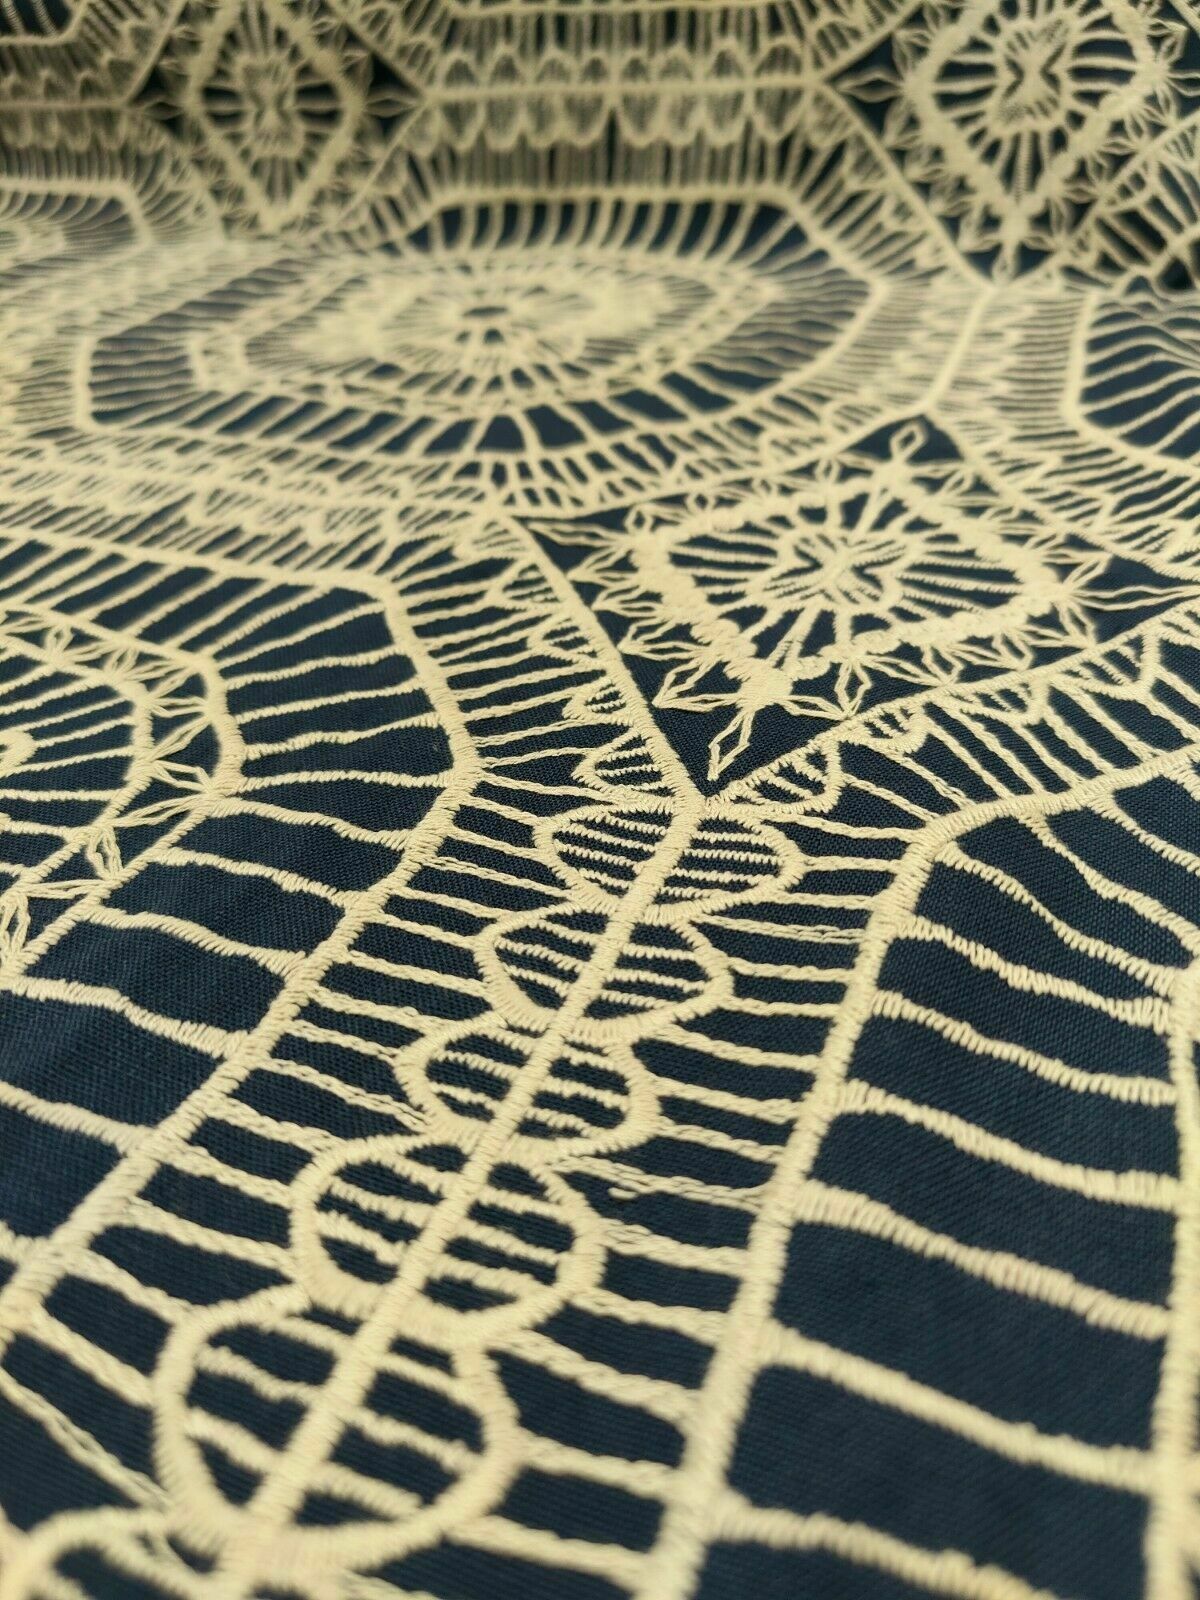 Harlequin Macrame Indigo Embroidered Curtain Upholstery Fabric Per Metre